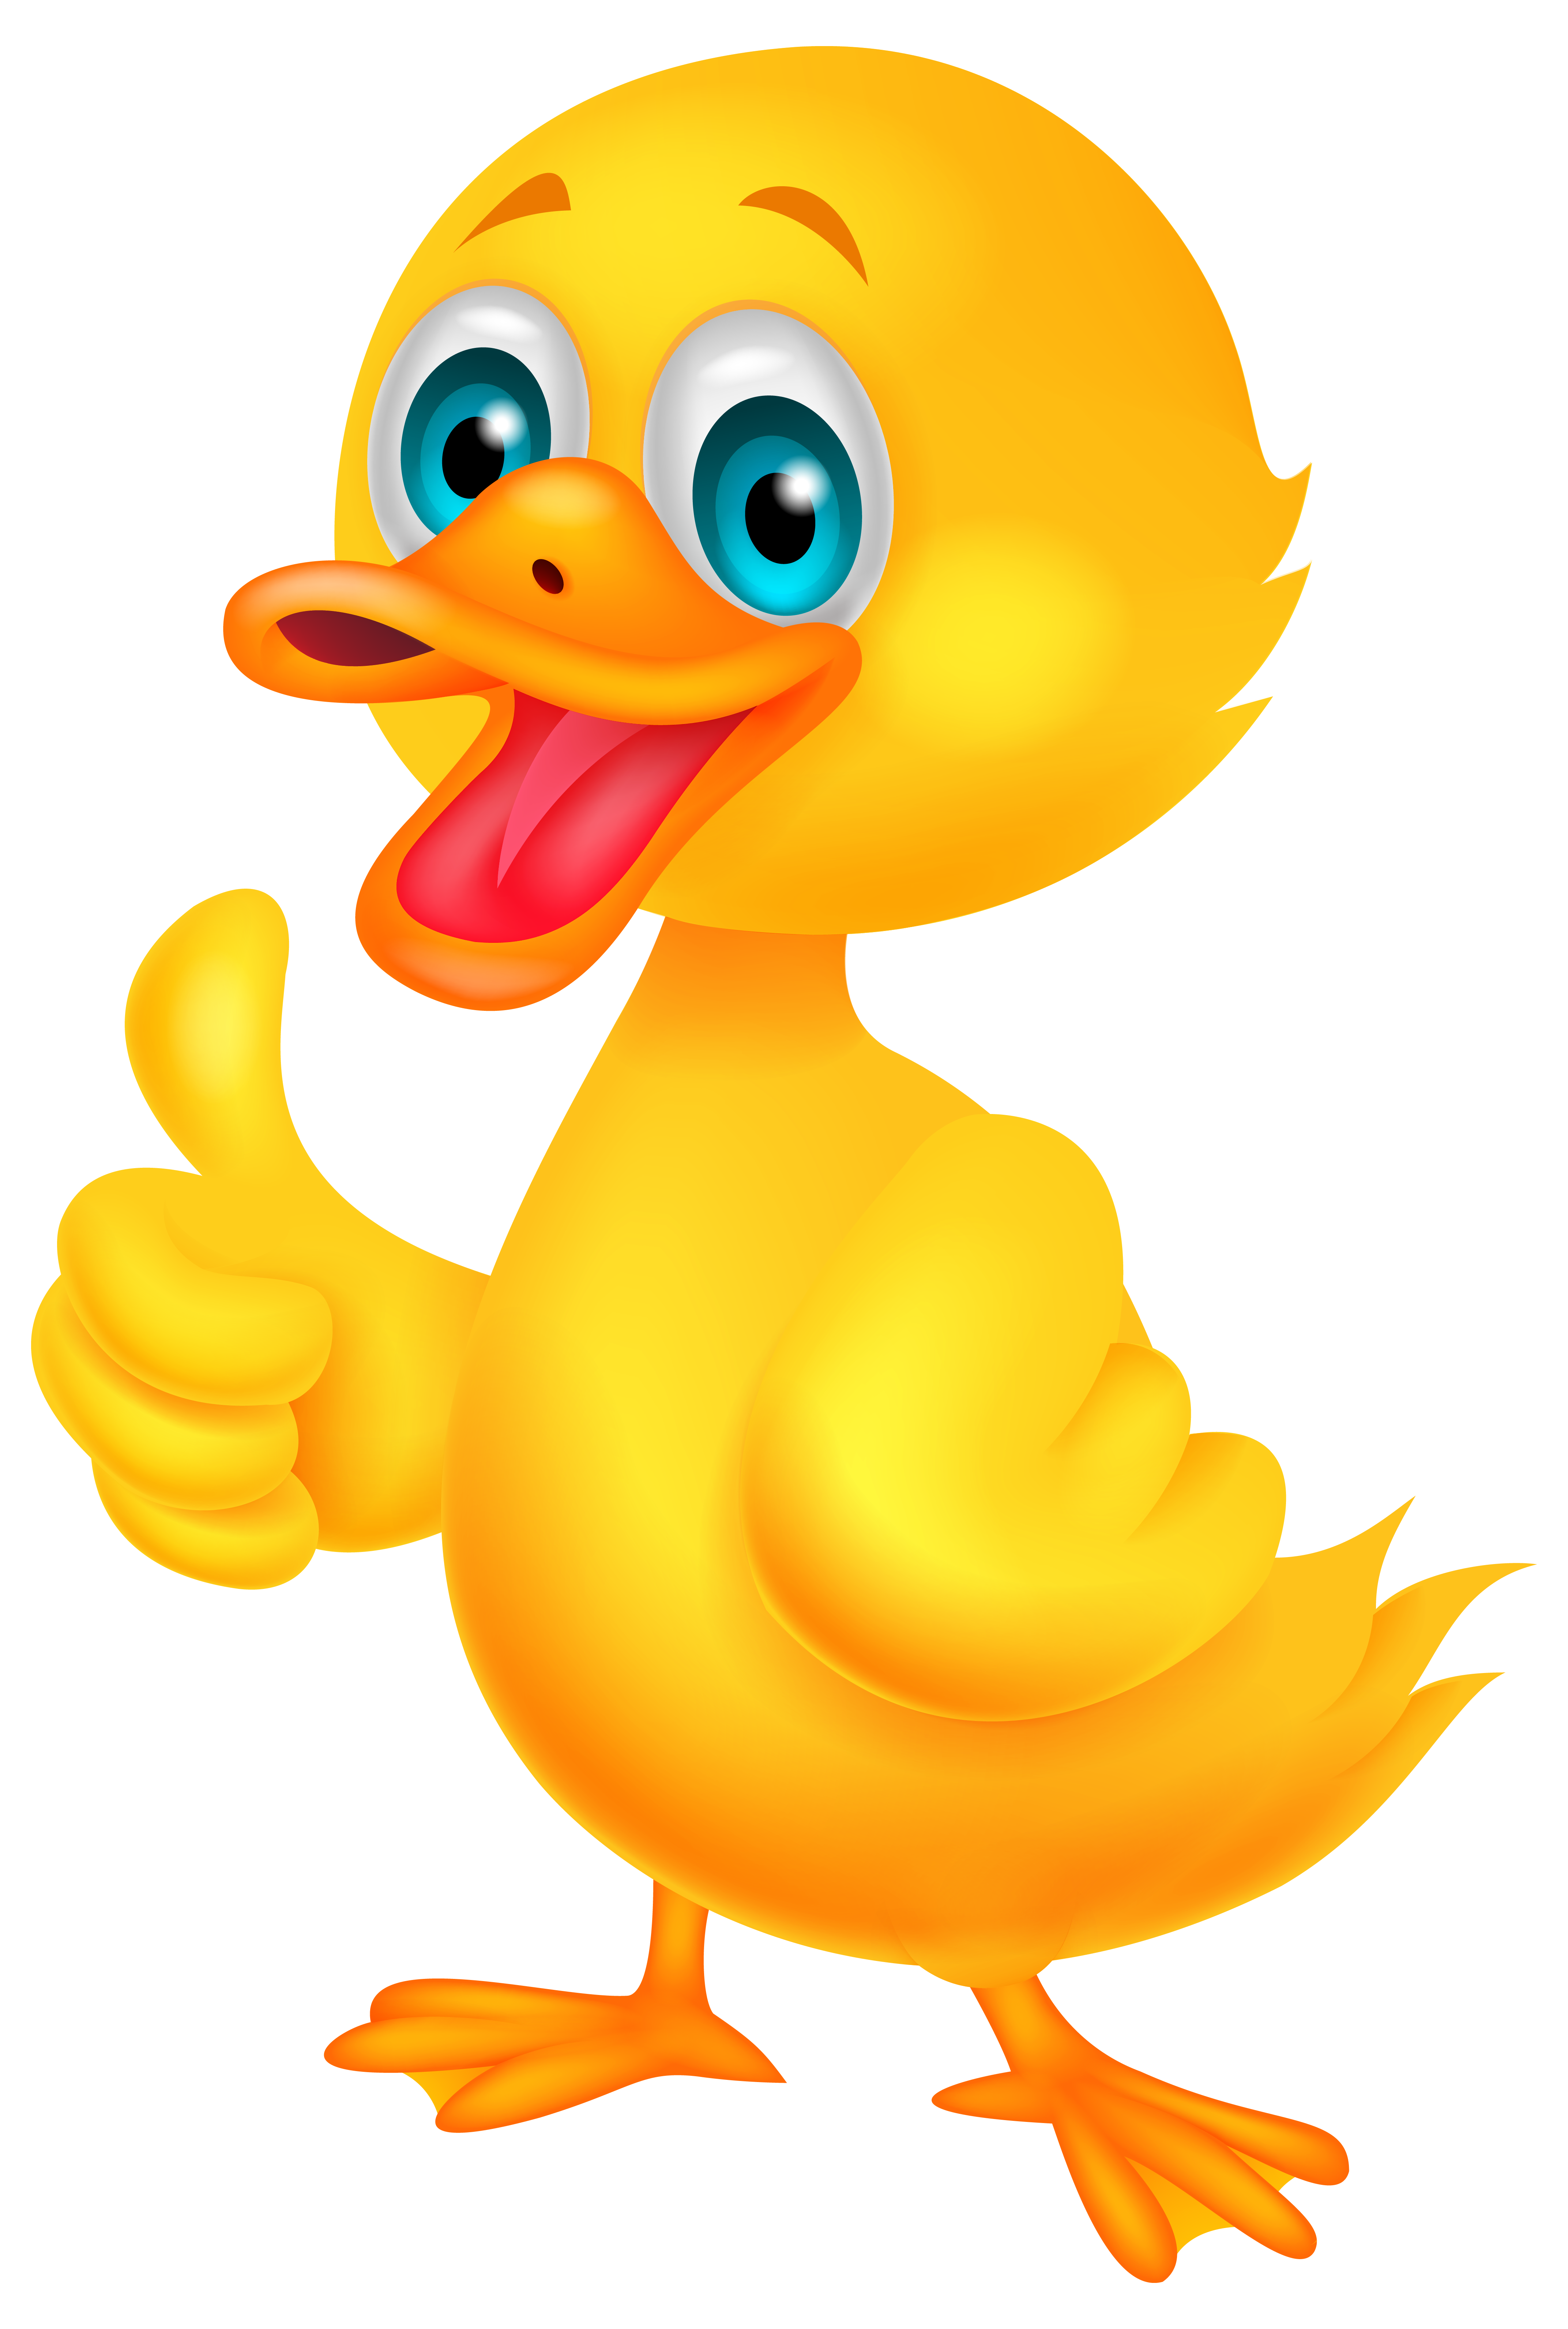 Duck toy animal yellow. Kangaroo clipart sad cartoon